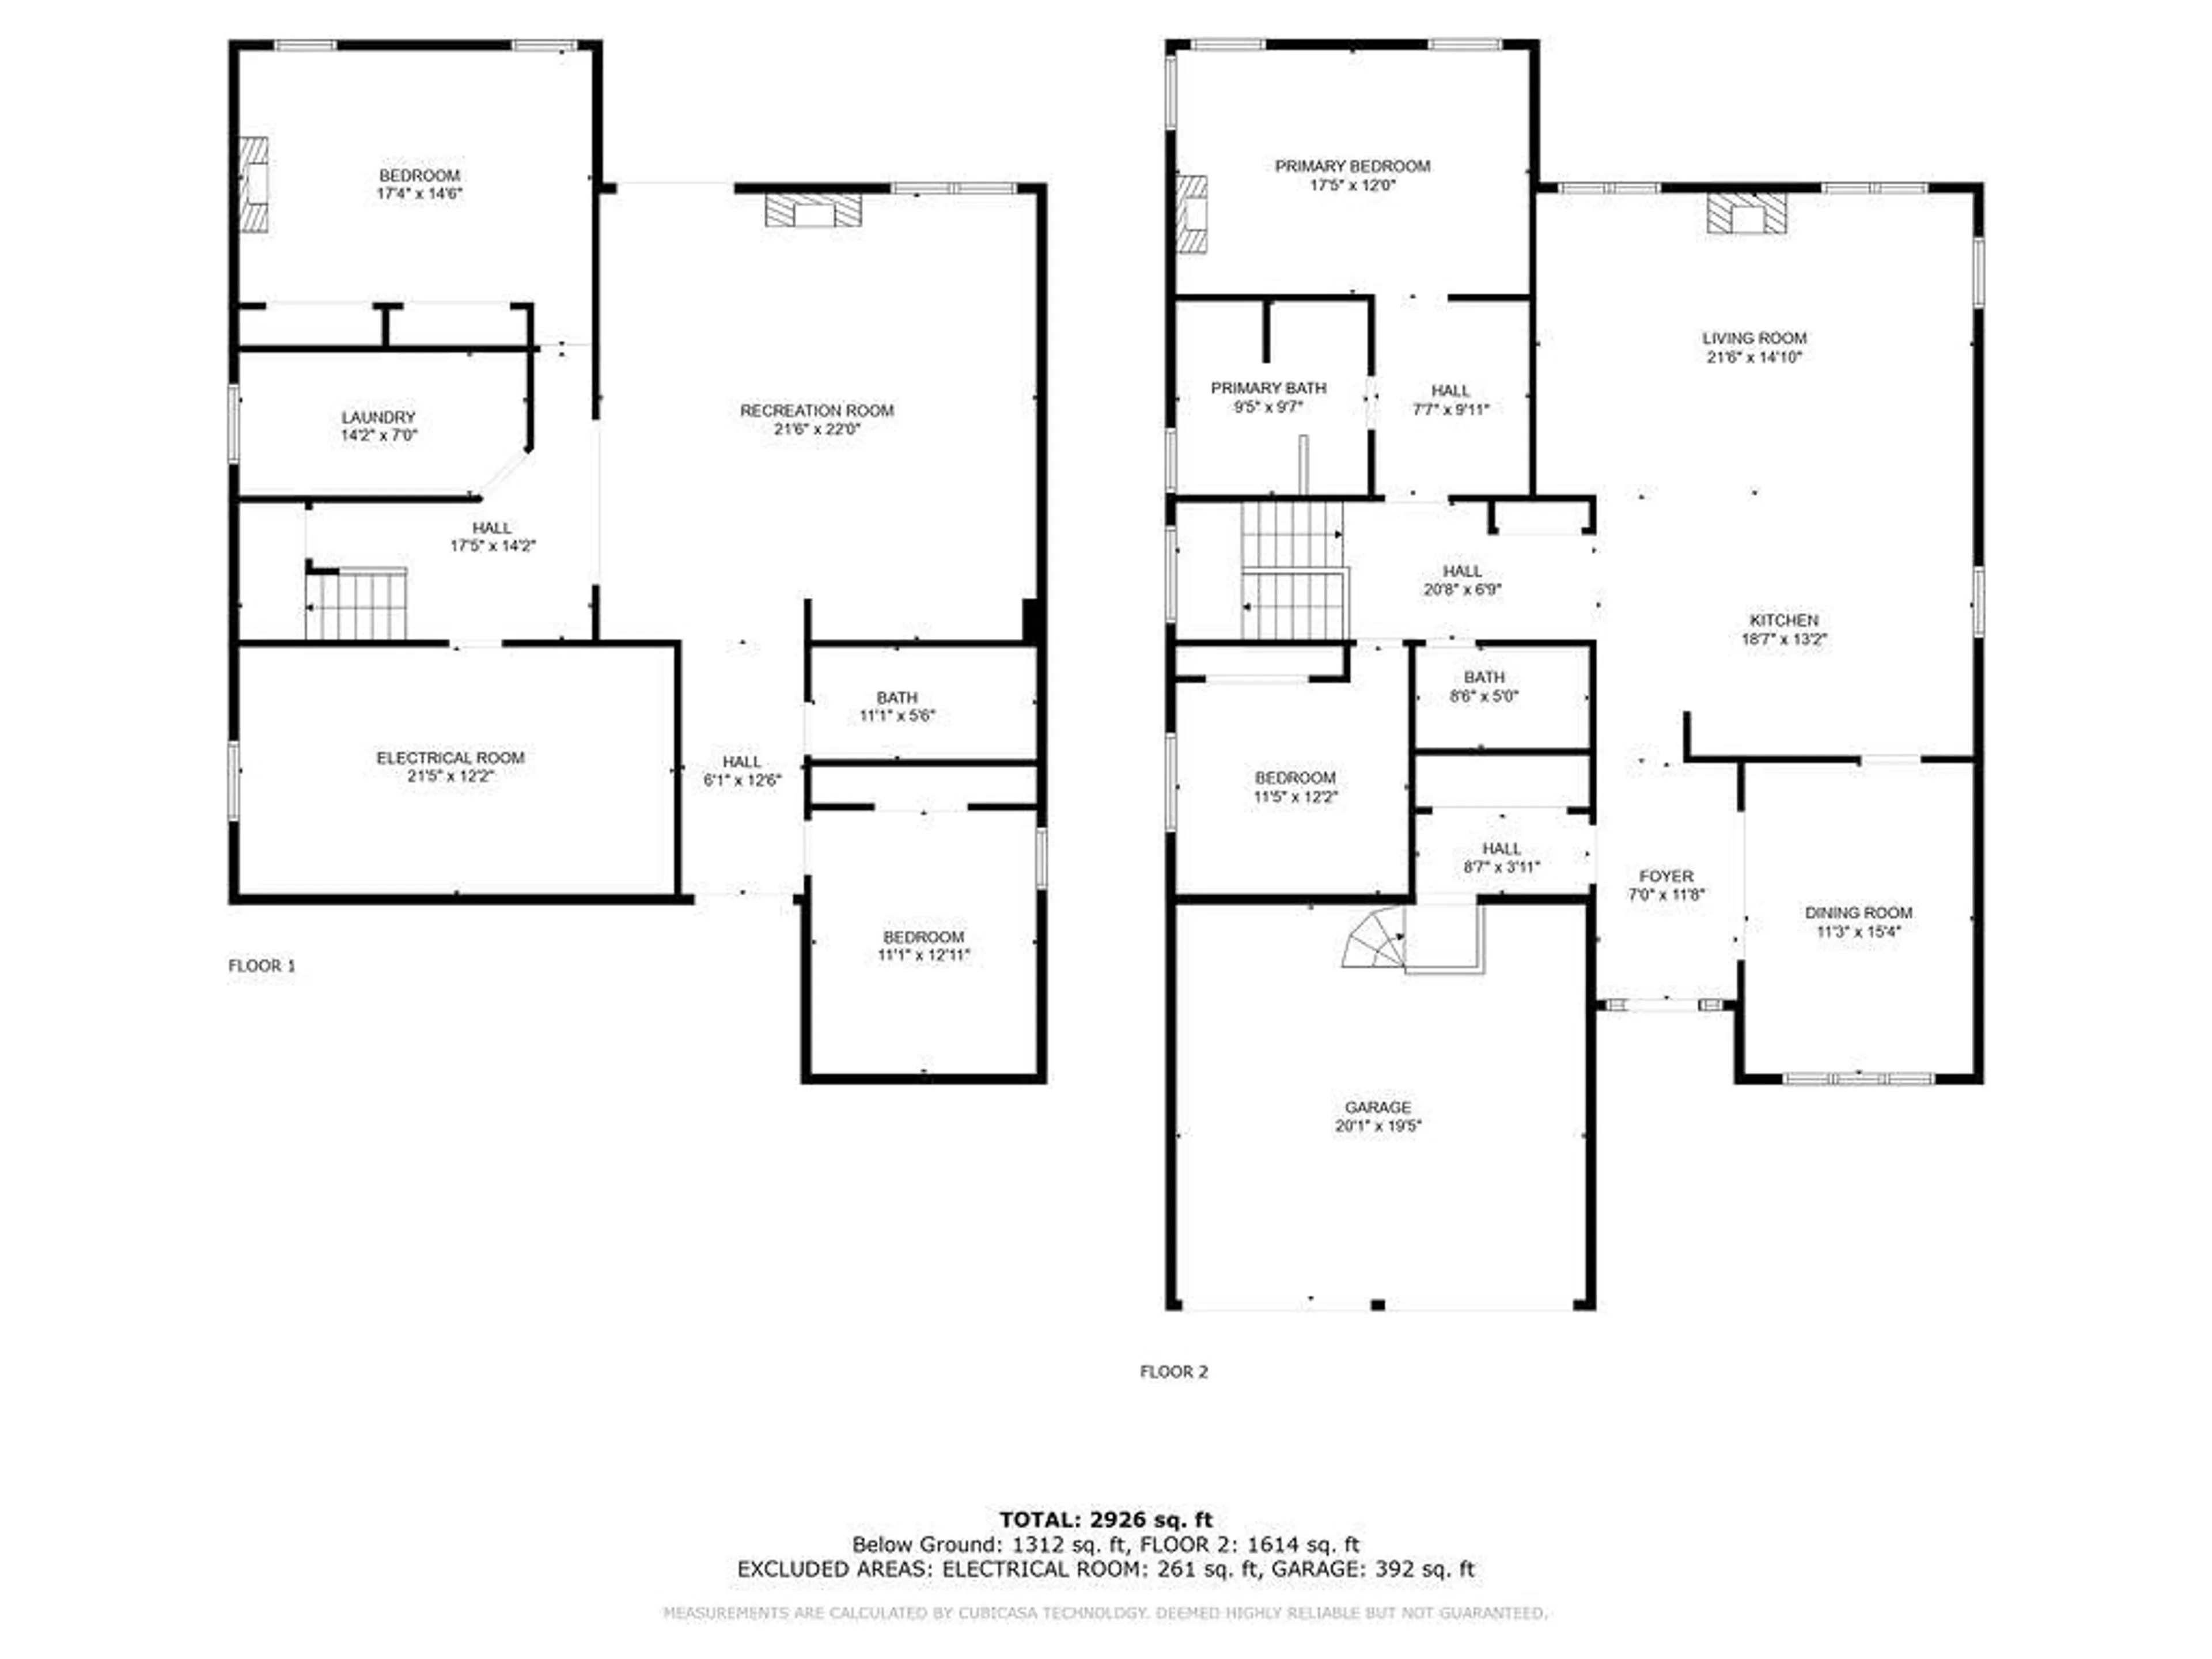 Floor plan for 167 Crompton Dr, Barrie Ontario L4M 6P1